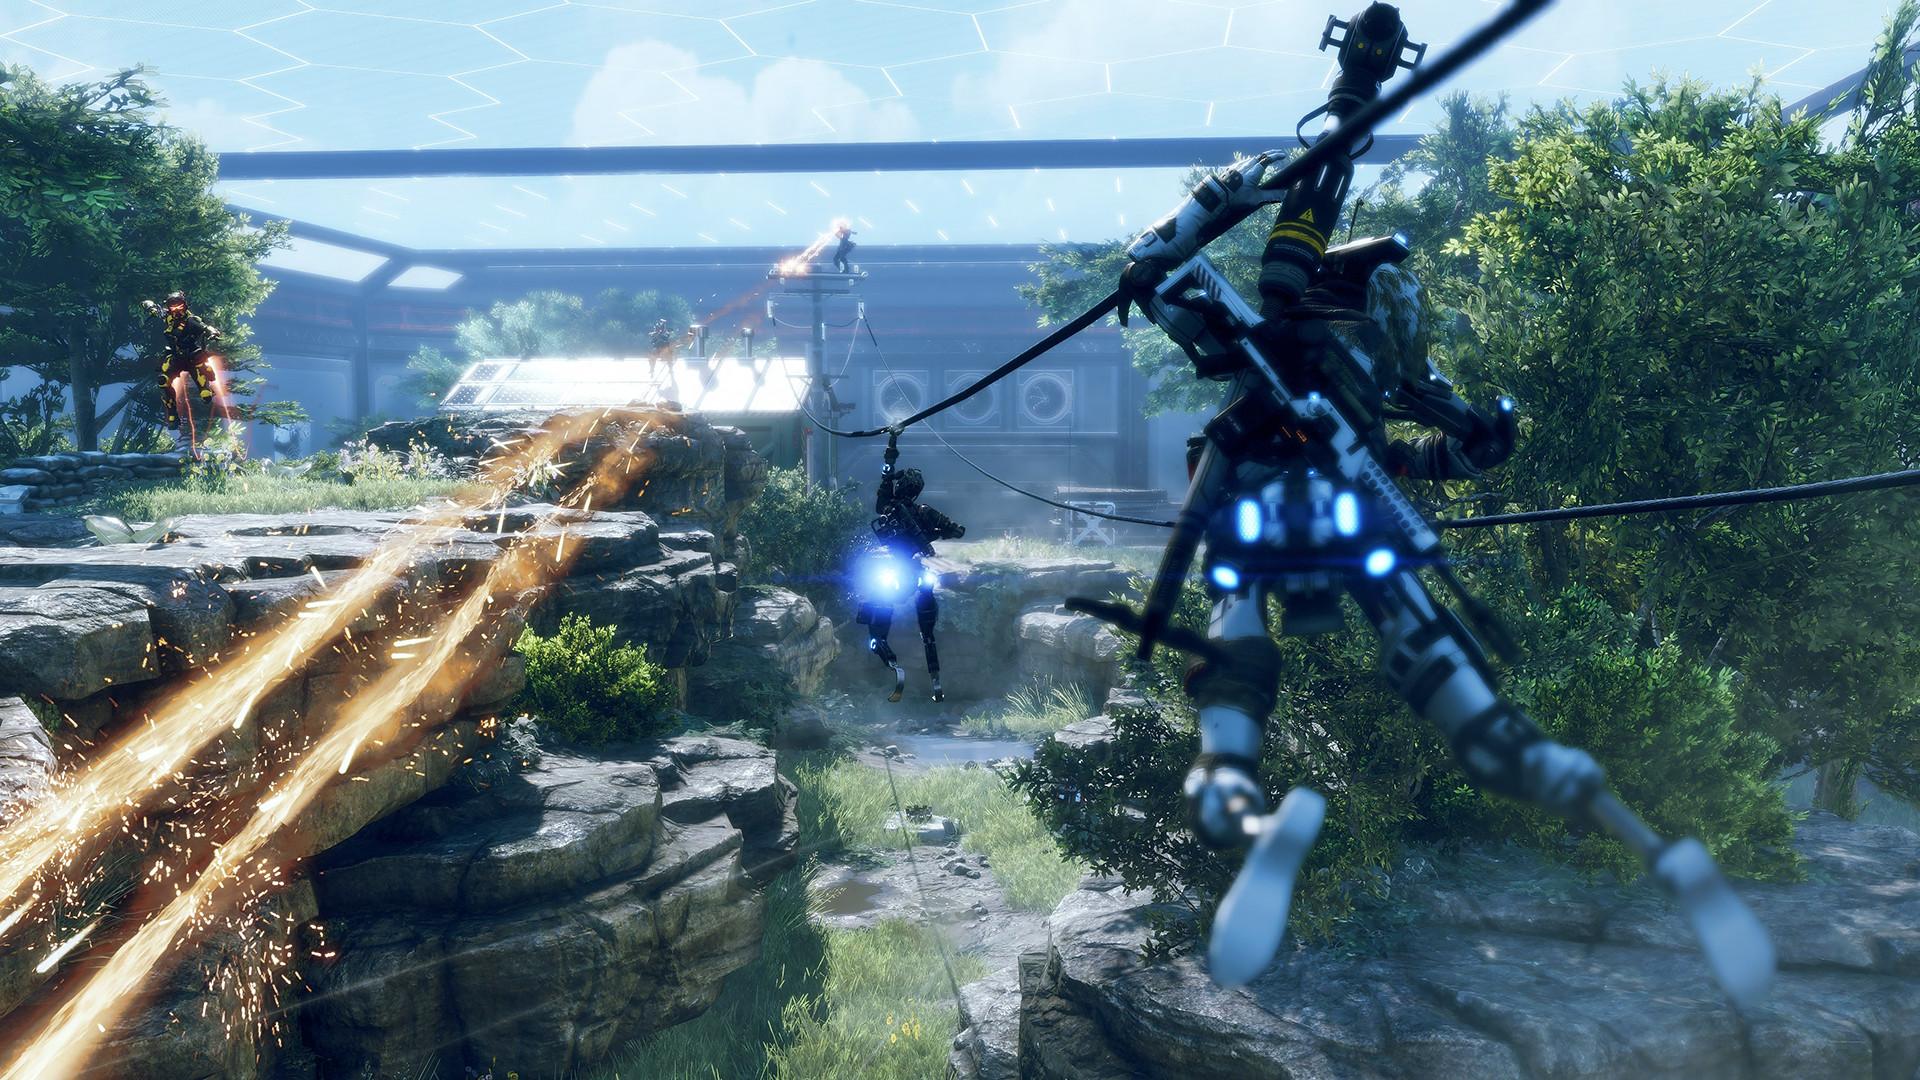 Screenshot №3 from game Titanfall® 2